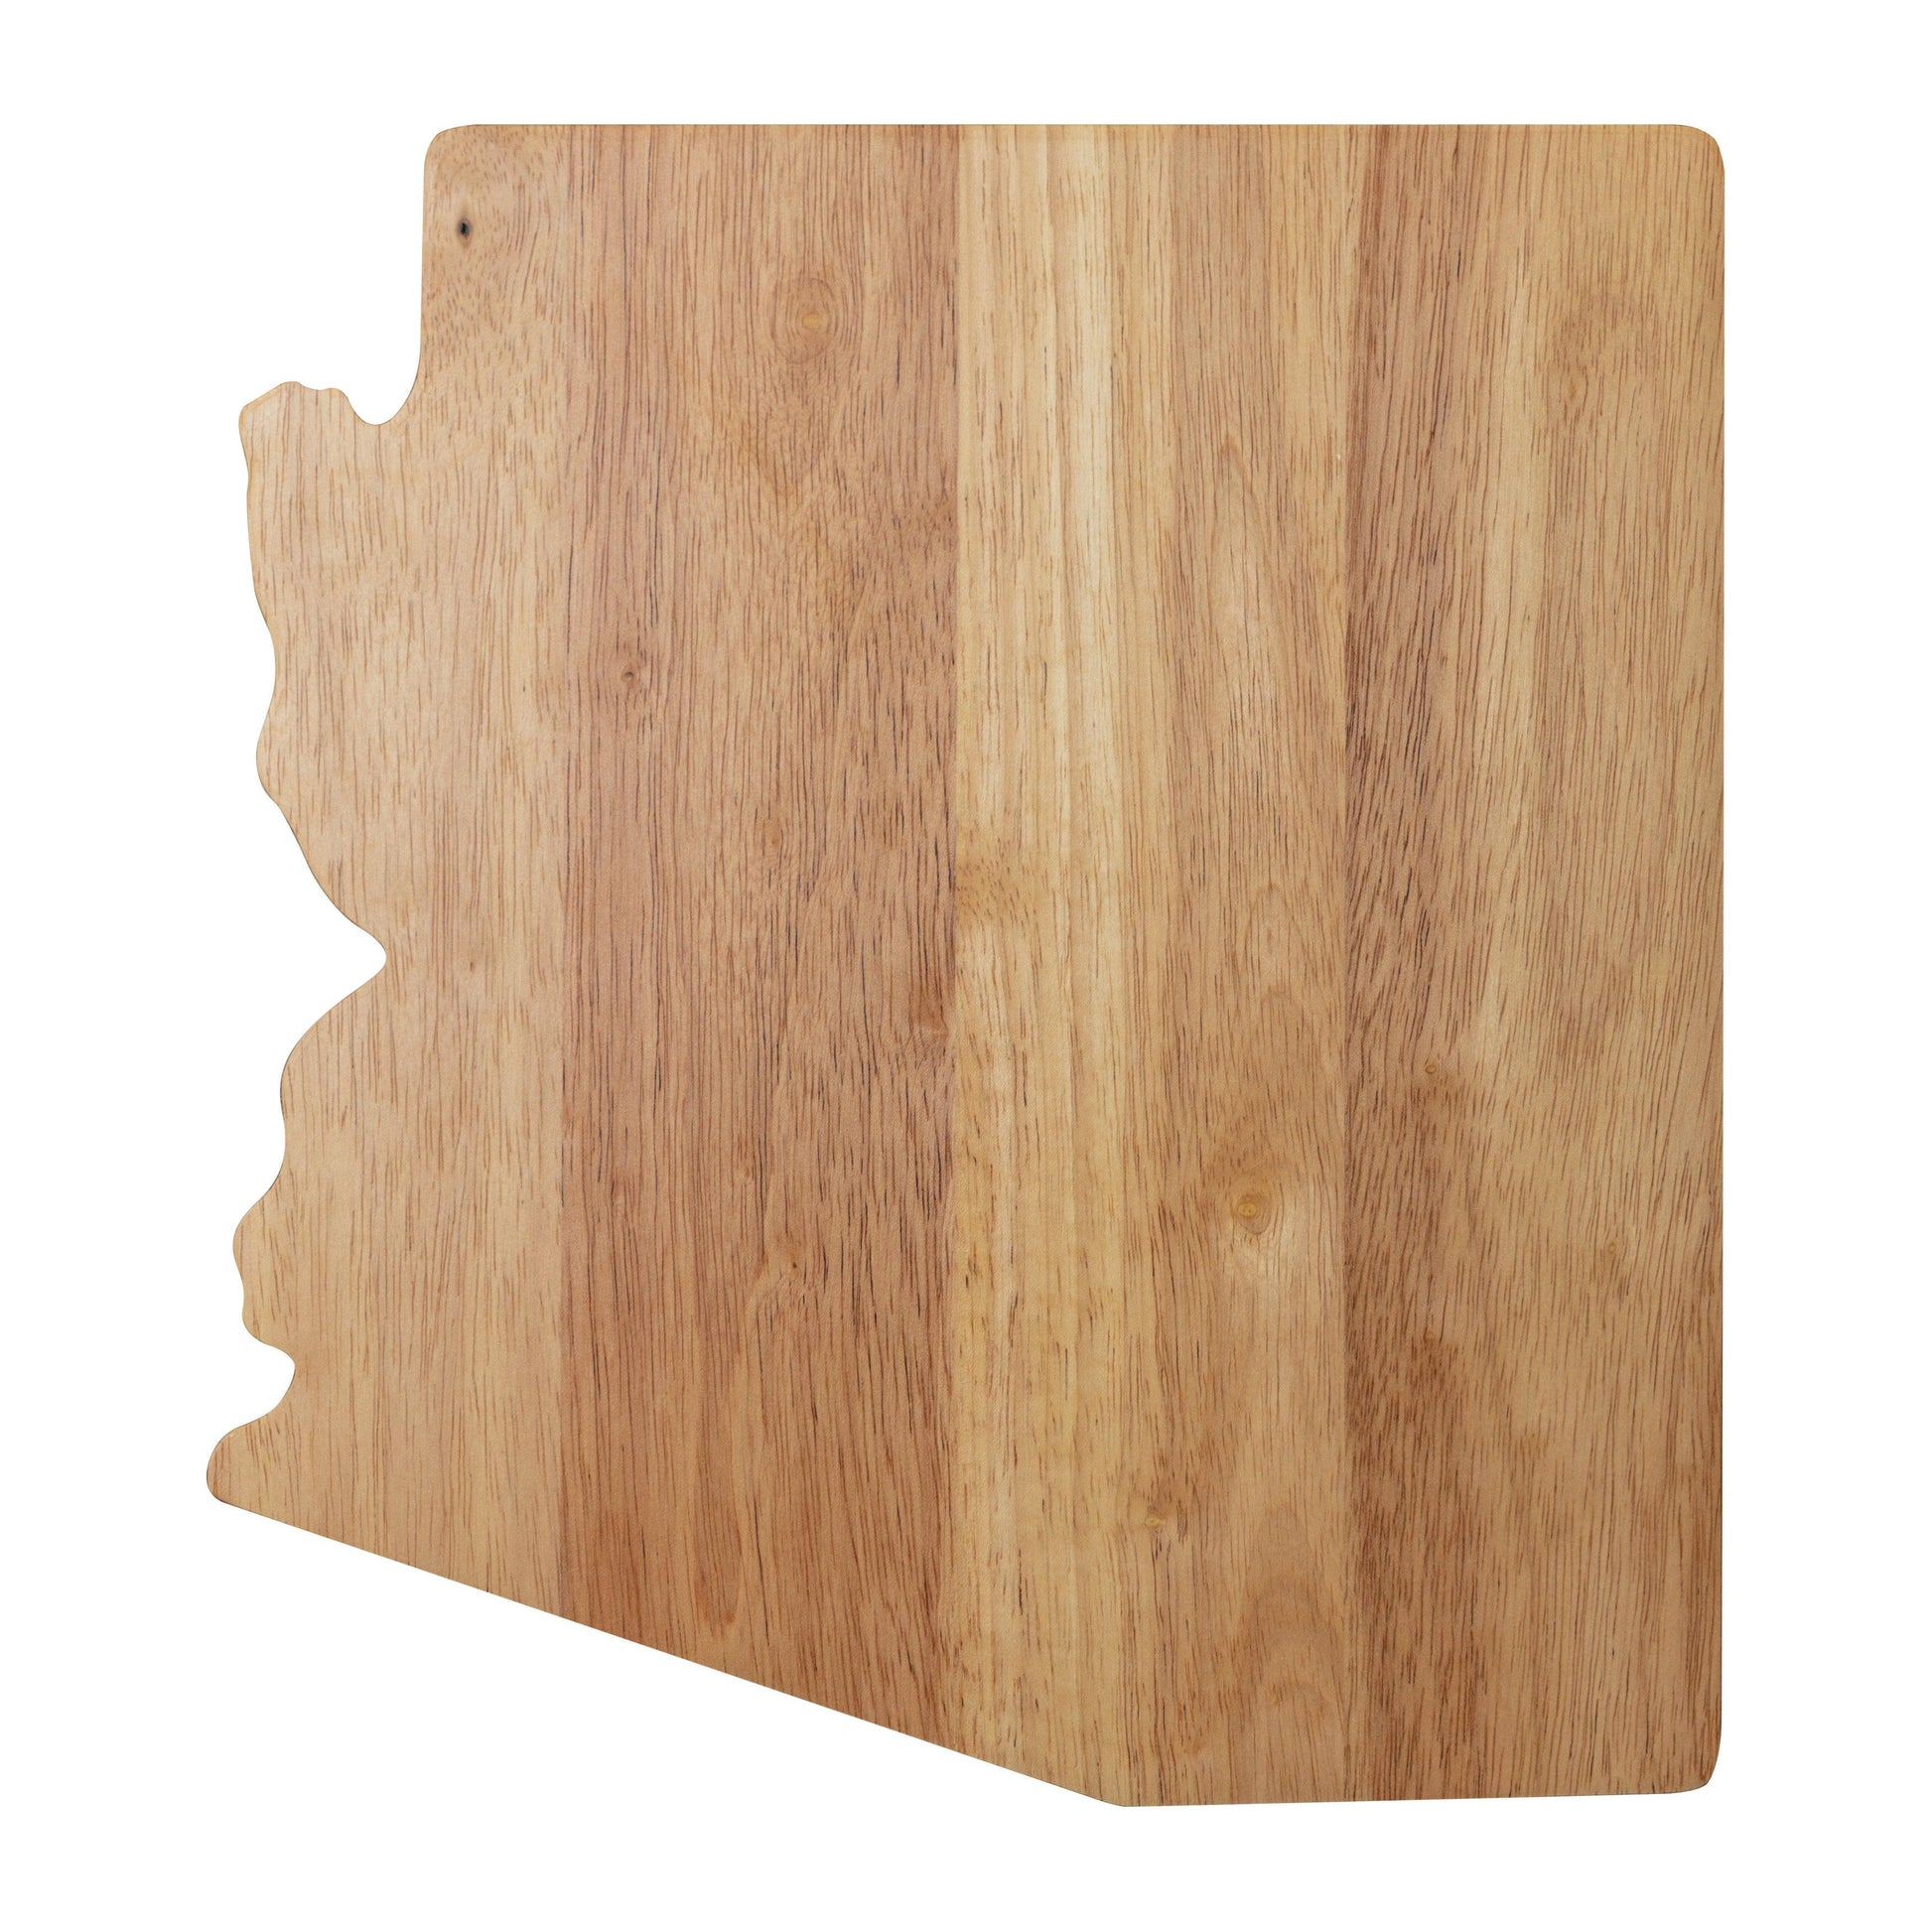 MakerFlo Crafts Arizona Cutting Board, Rubber Wood